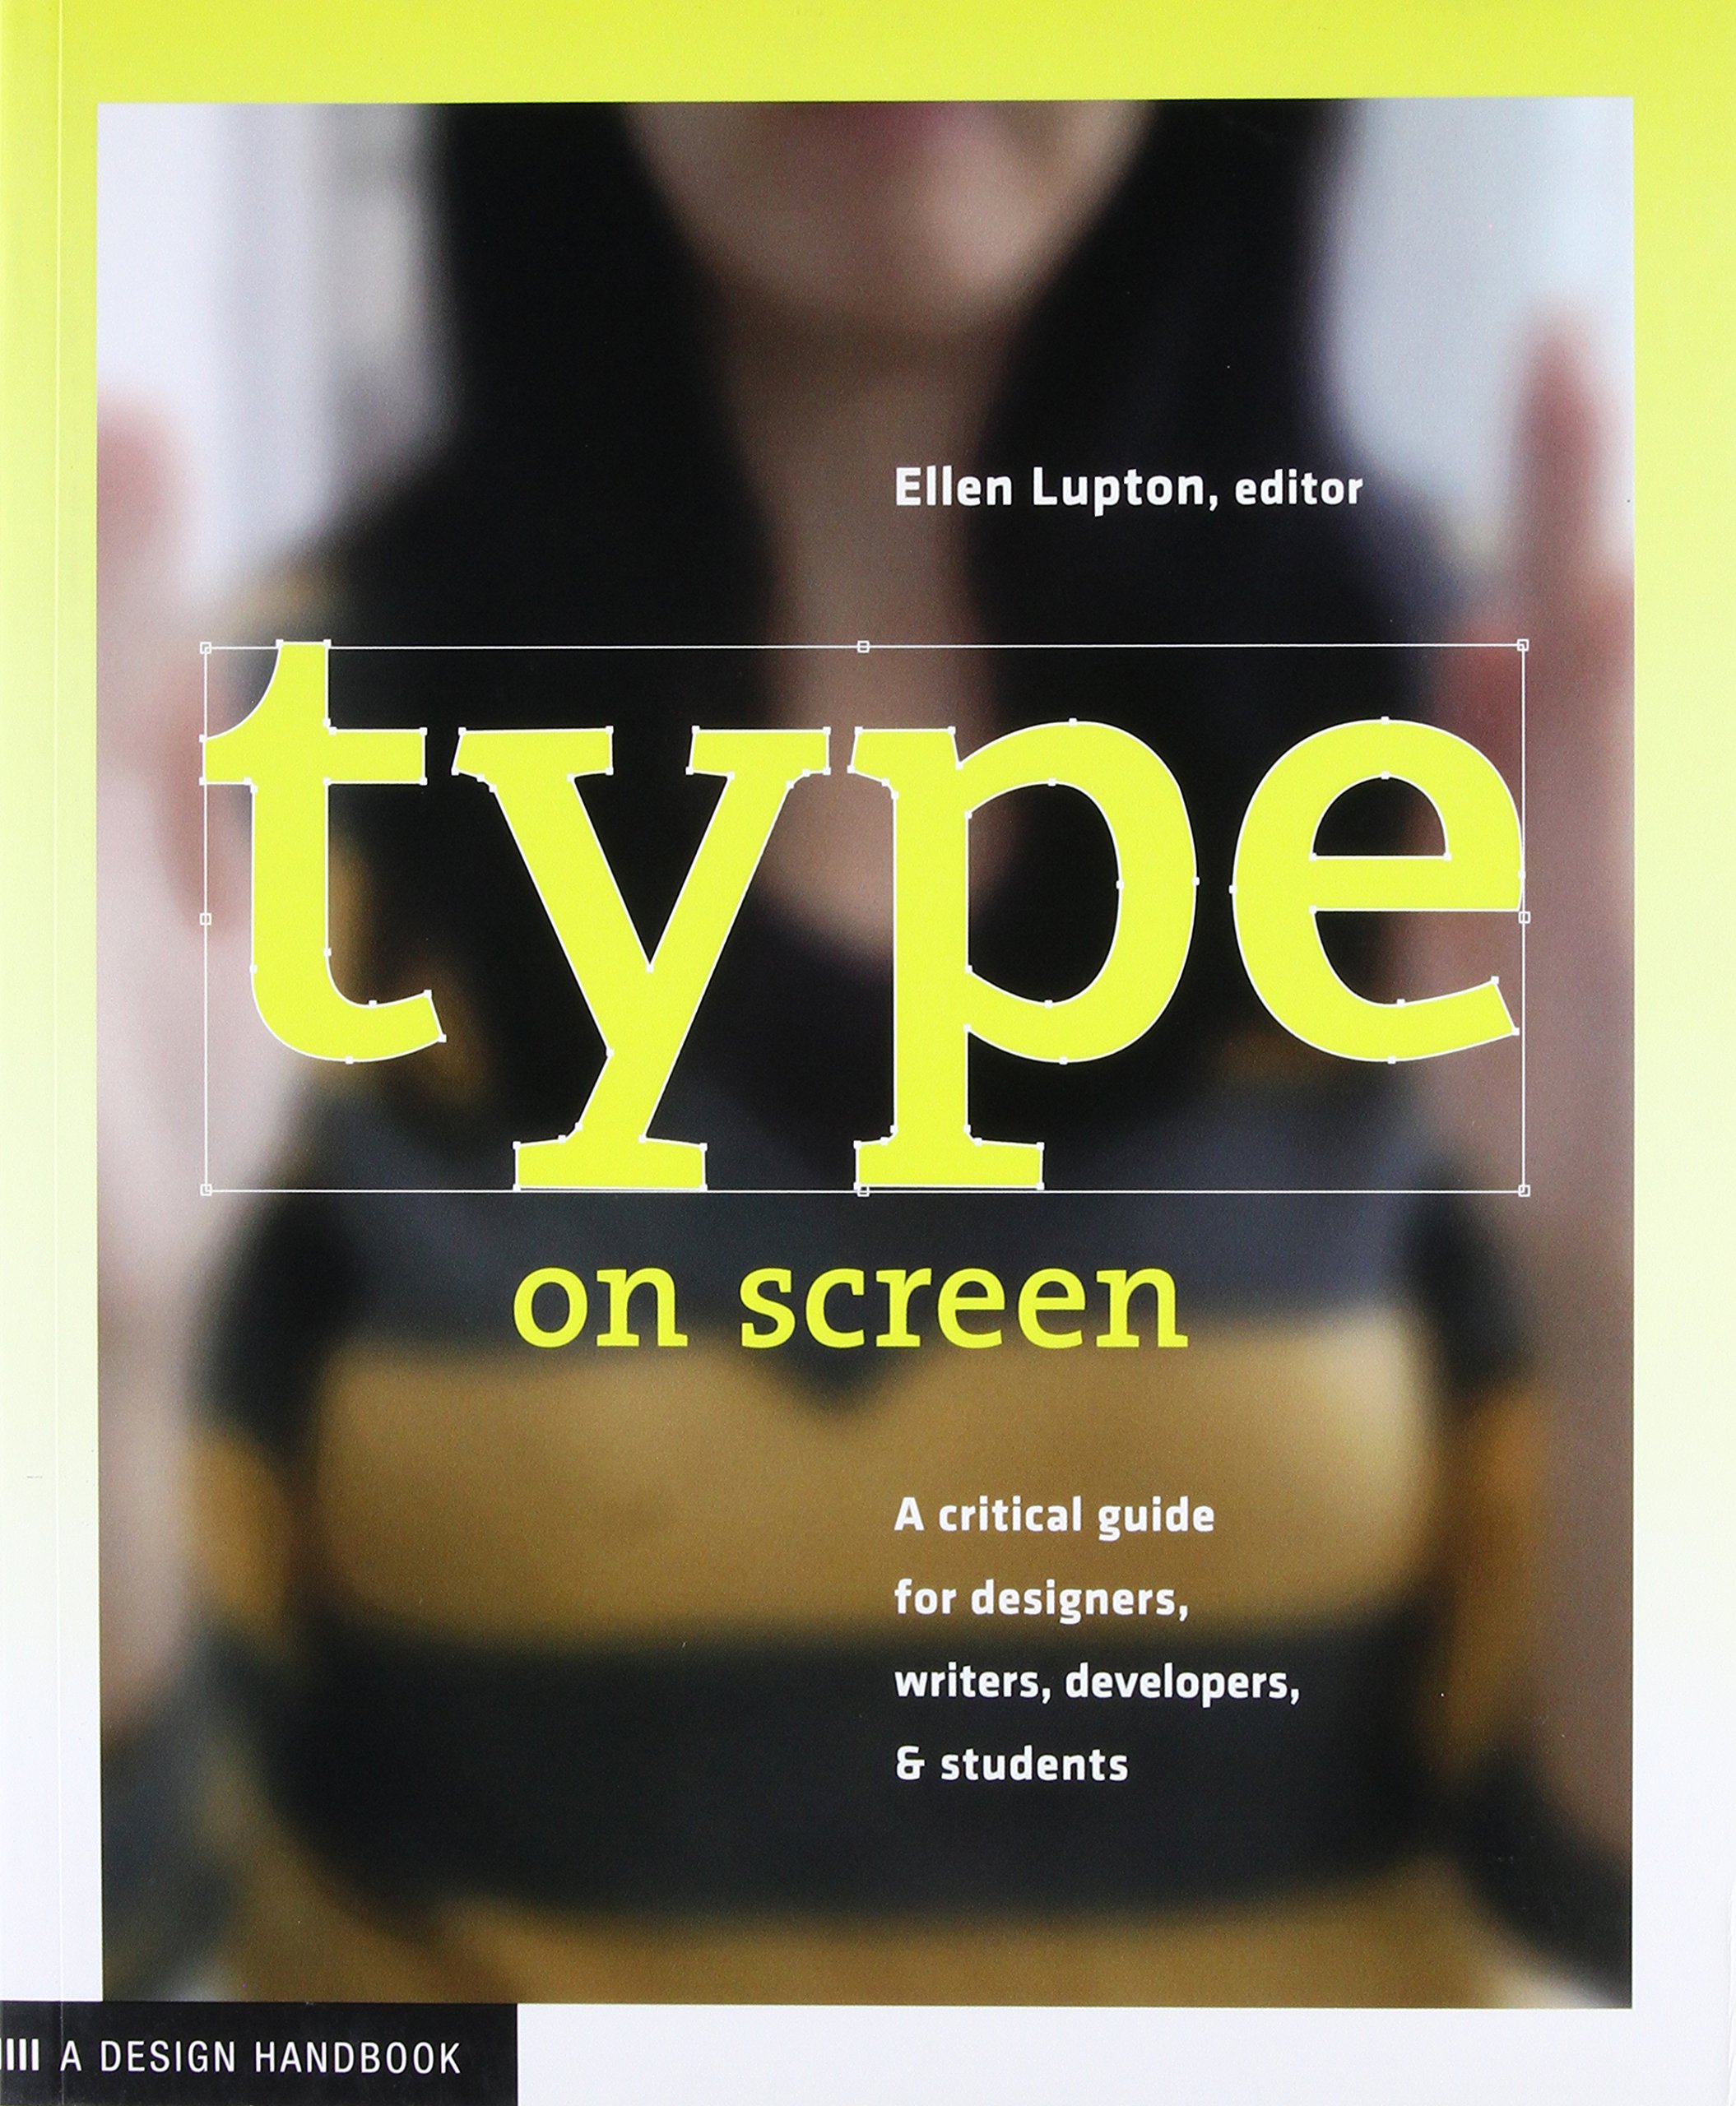 Ellen Lupton's book Type on Screen